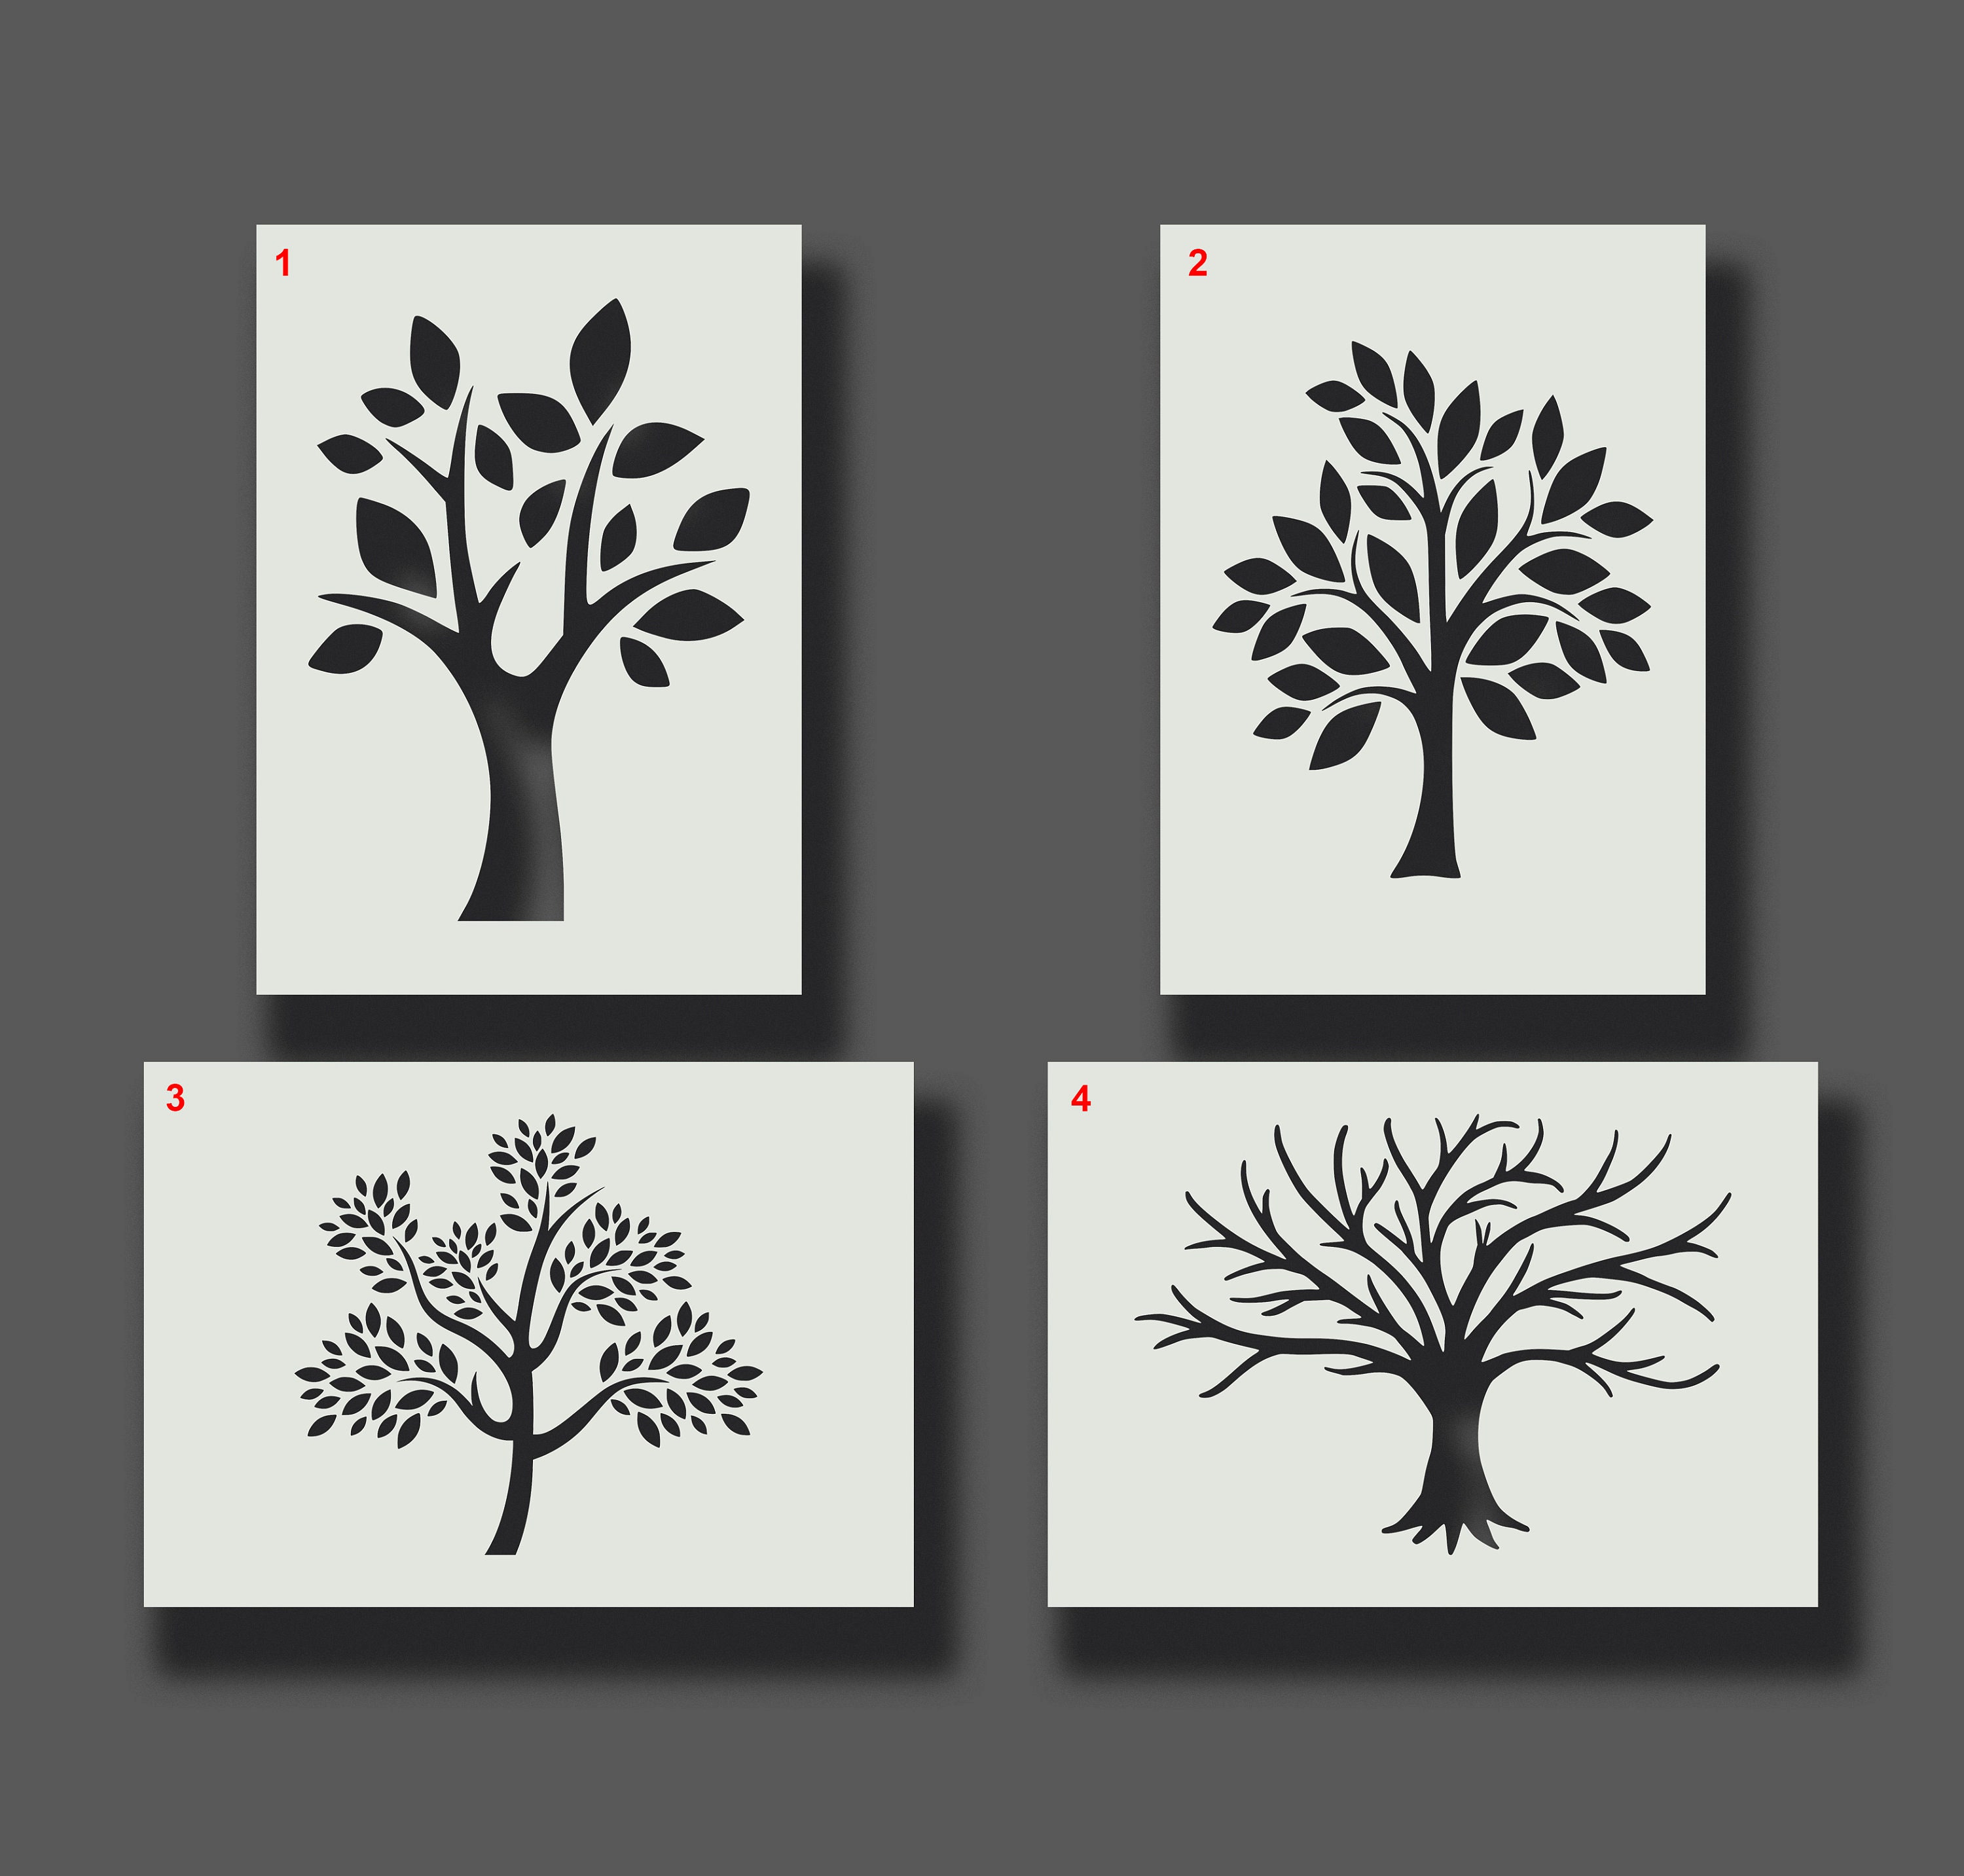  Stencil1 Acacia Tree Stencil Durable Quality Reusable